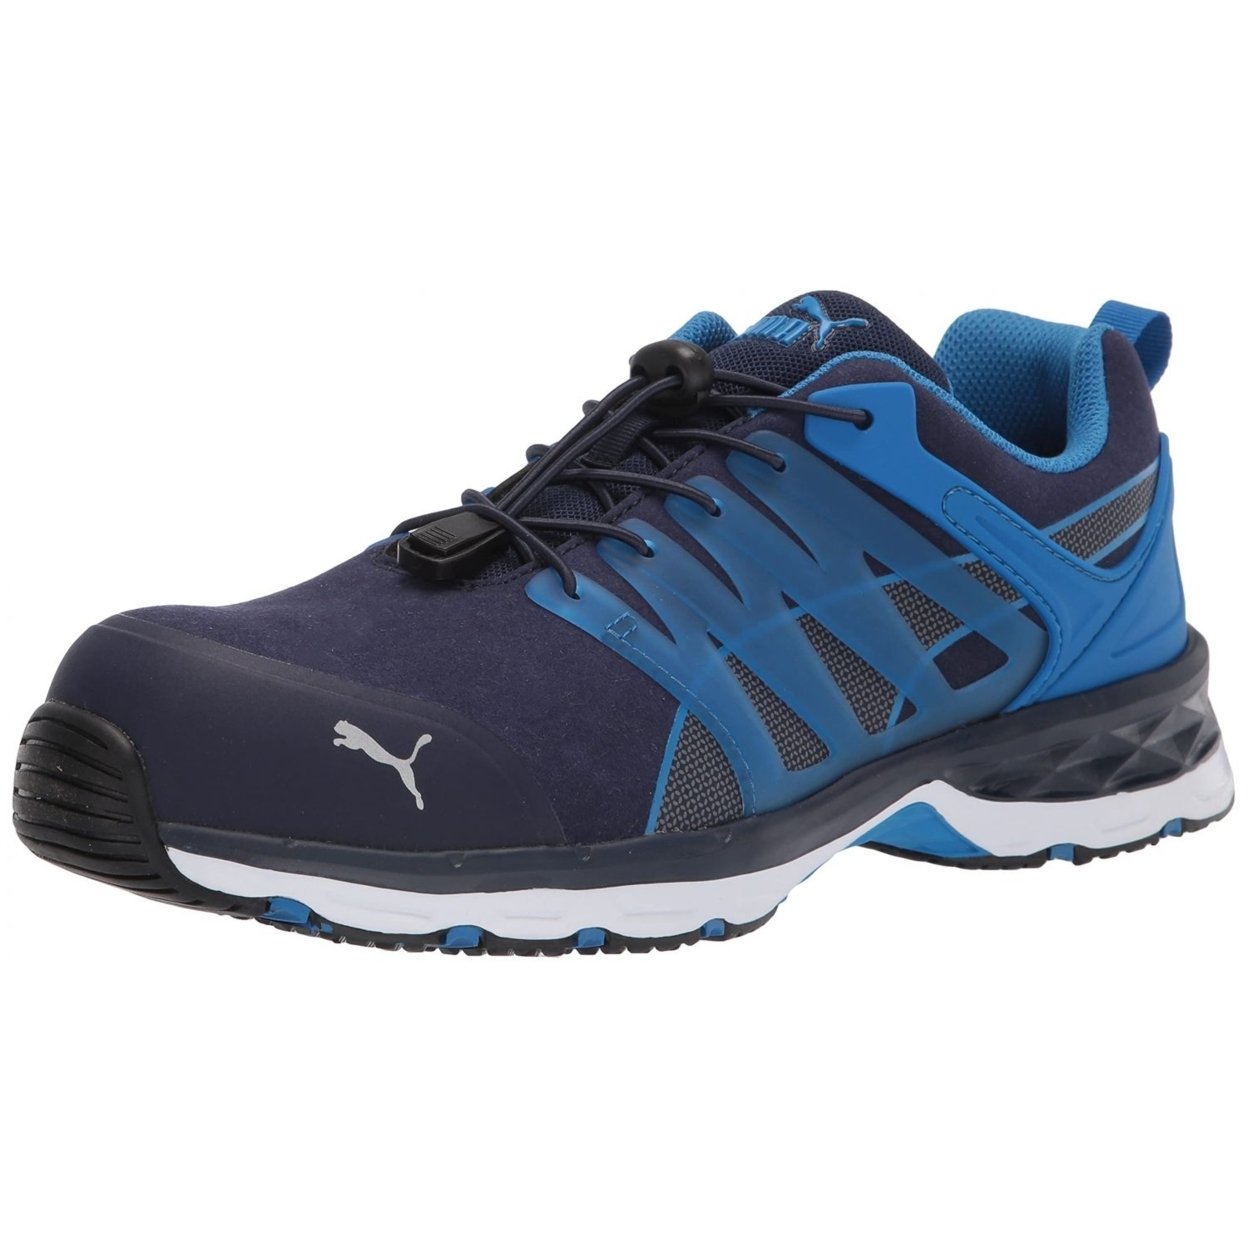 PUMA Safety Men's Velocity 2.0 Composite Toe ESD Work Shoe Blue - 643855 ONE SIZE BLUE - BLUE, 12